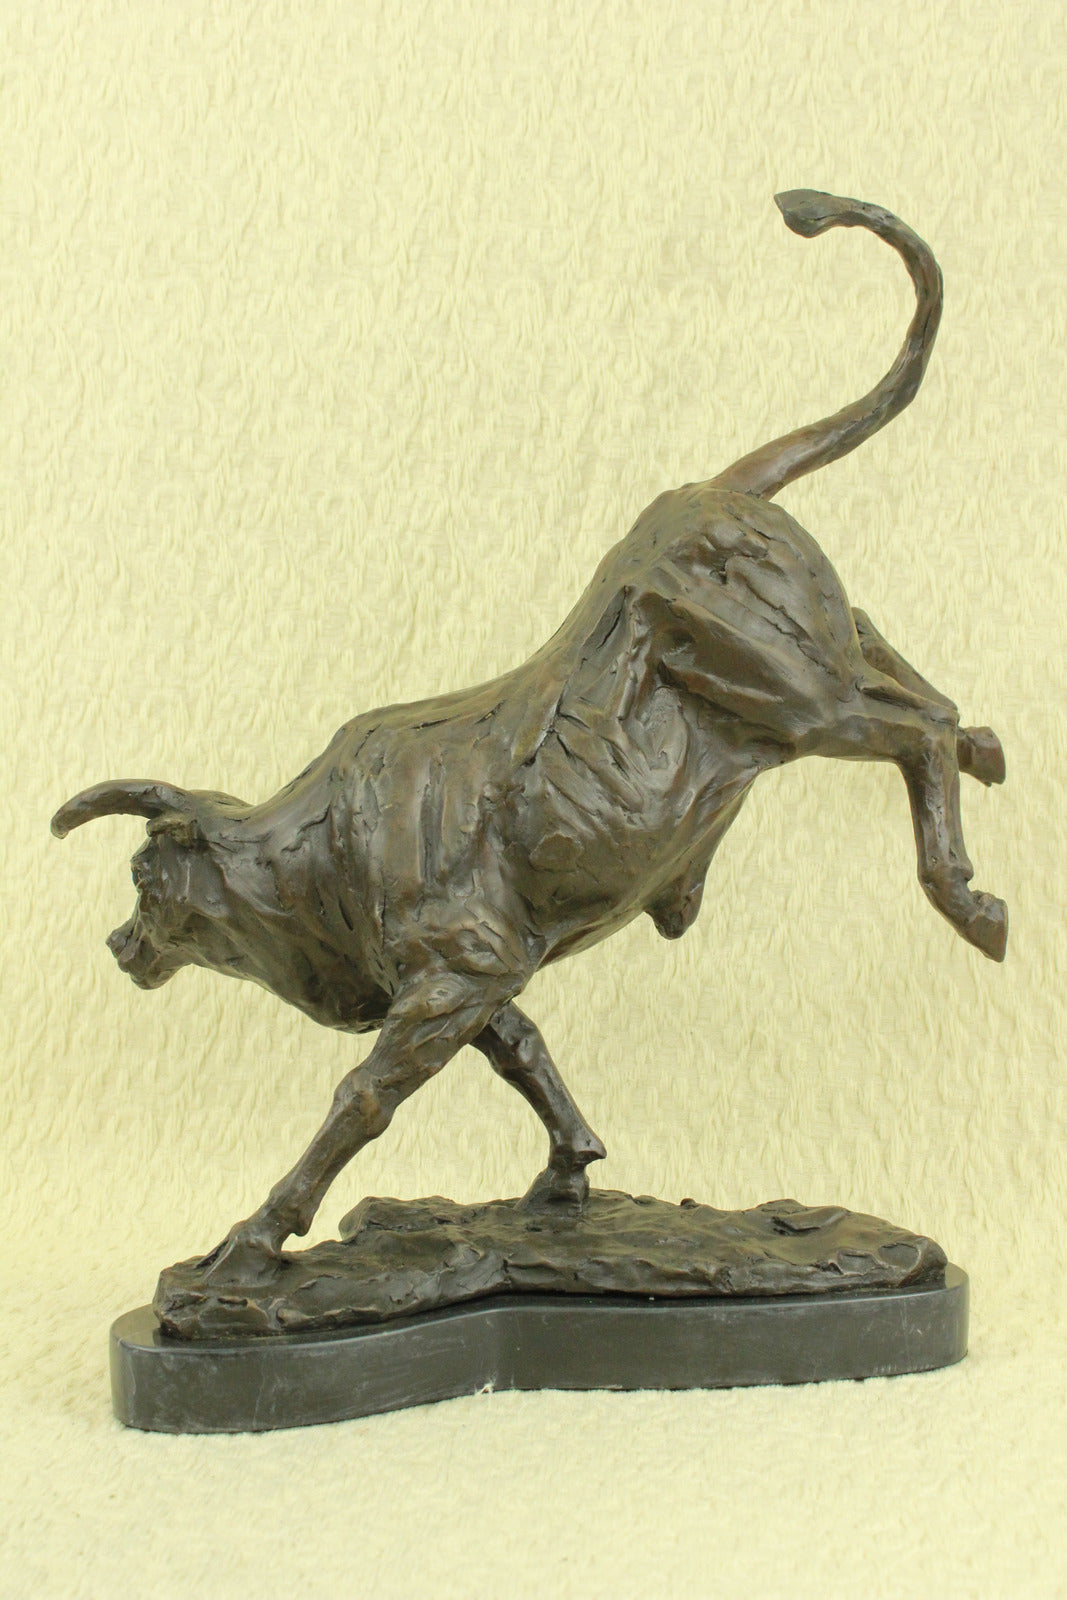 Handcrafted bronze sculpture SALE Des Office Broker Market Stock Large Cast Hot